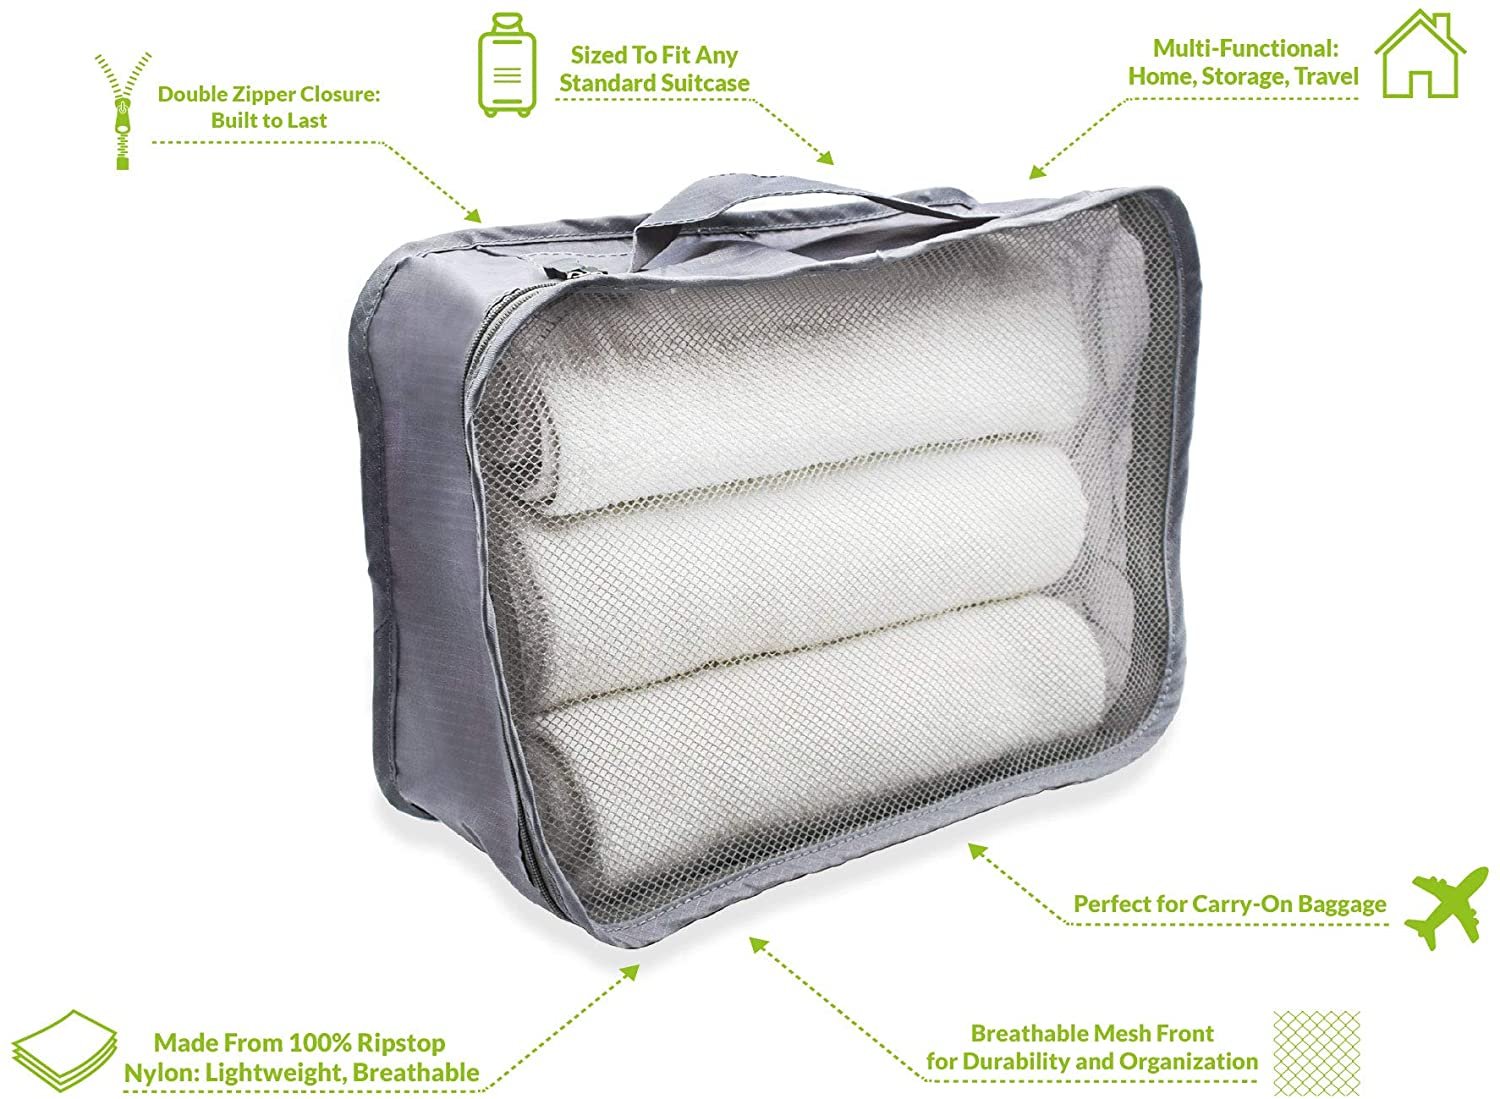 Medium Grey Packing Cubes - 4 Pack High Capacity Luggage Organizers for Travel, Ultralight Nylon Mesh Bags - 13.75x4x9.75